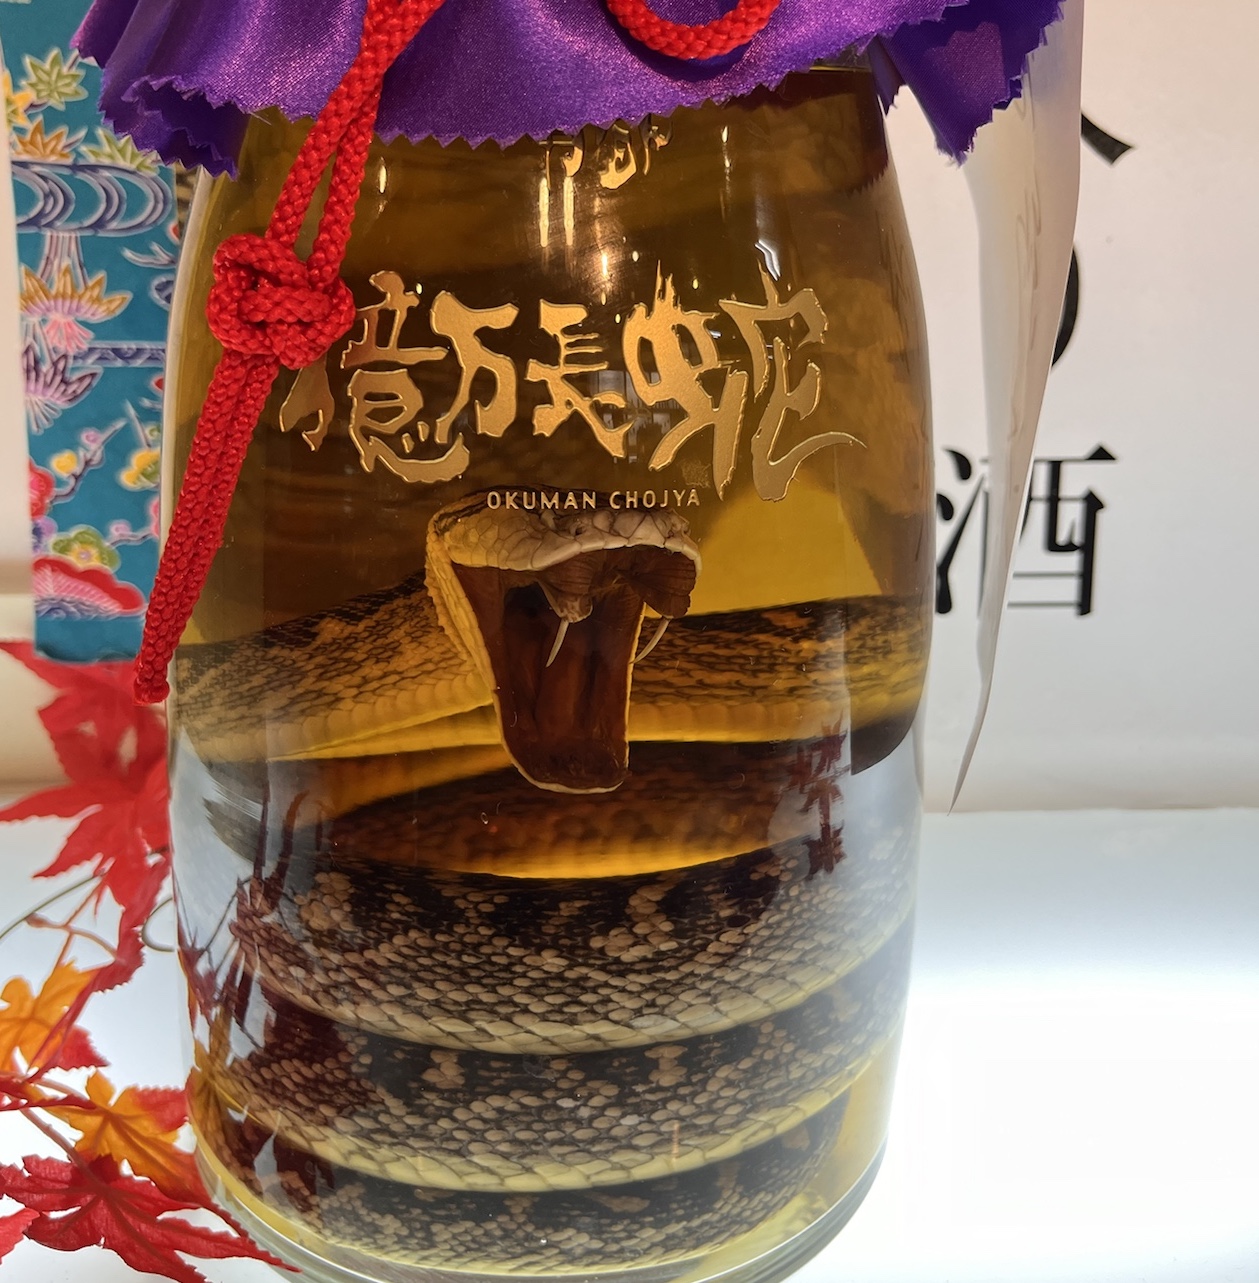 Awamori with habu snake from Okinawa